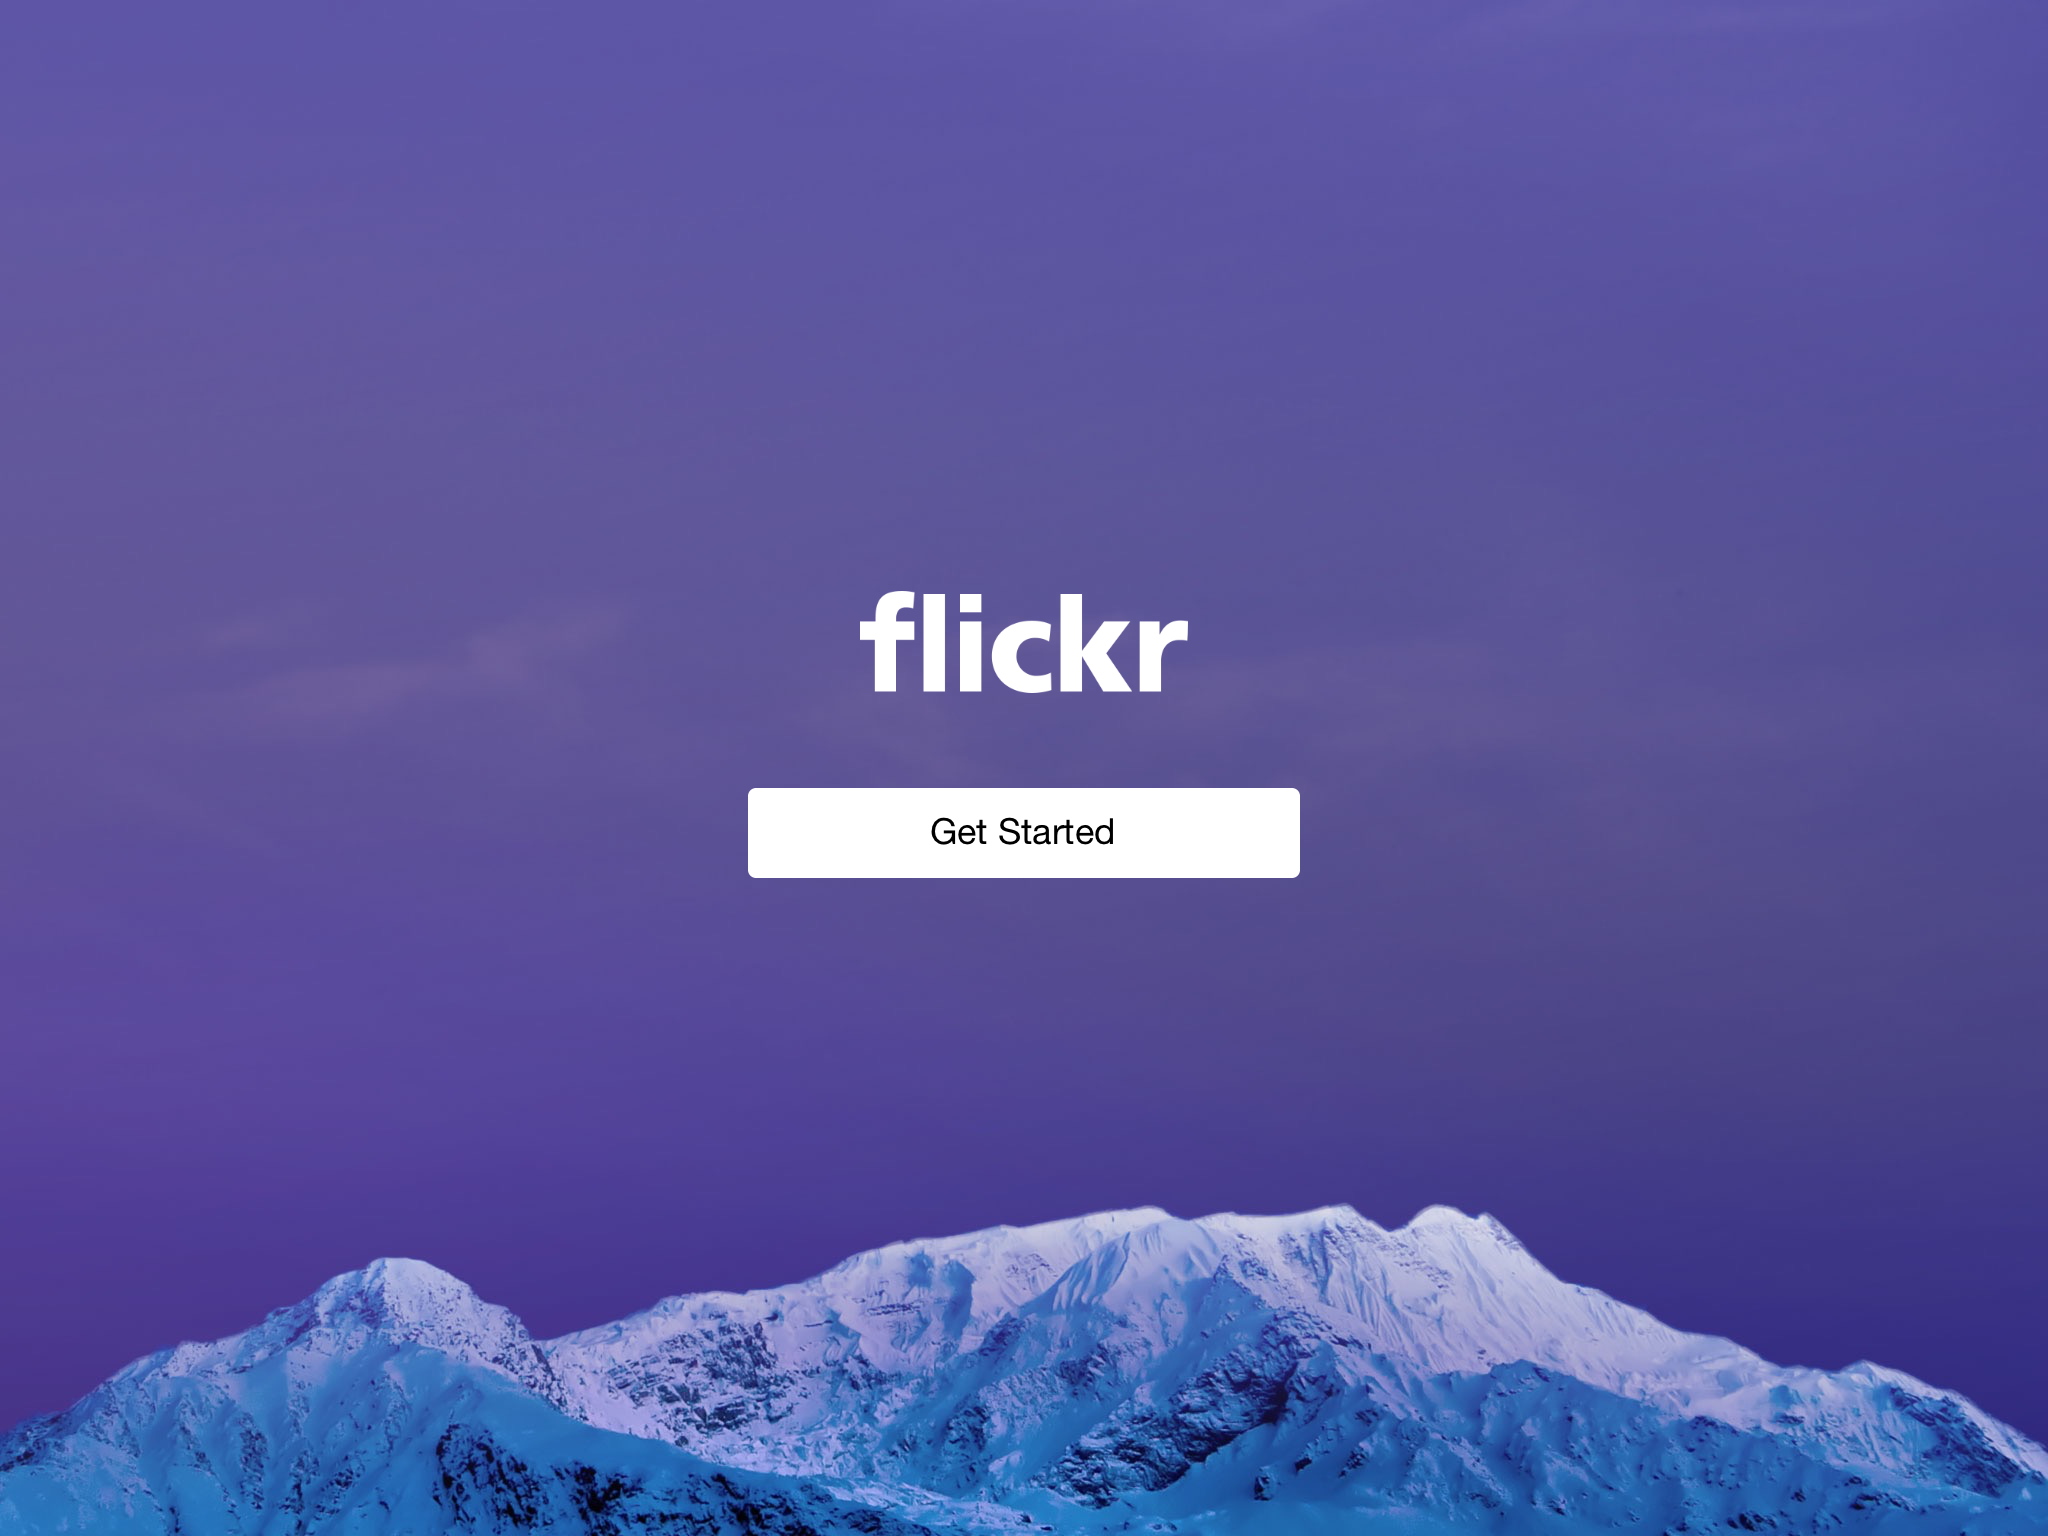 Flickr App on iPad